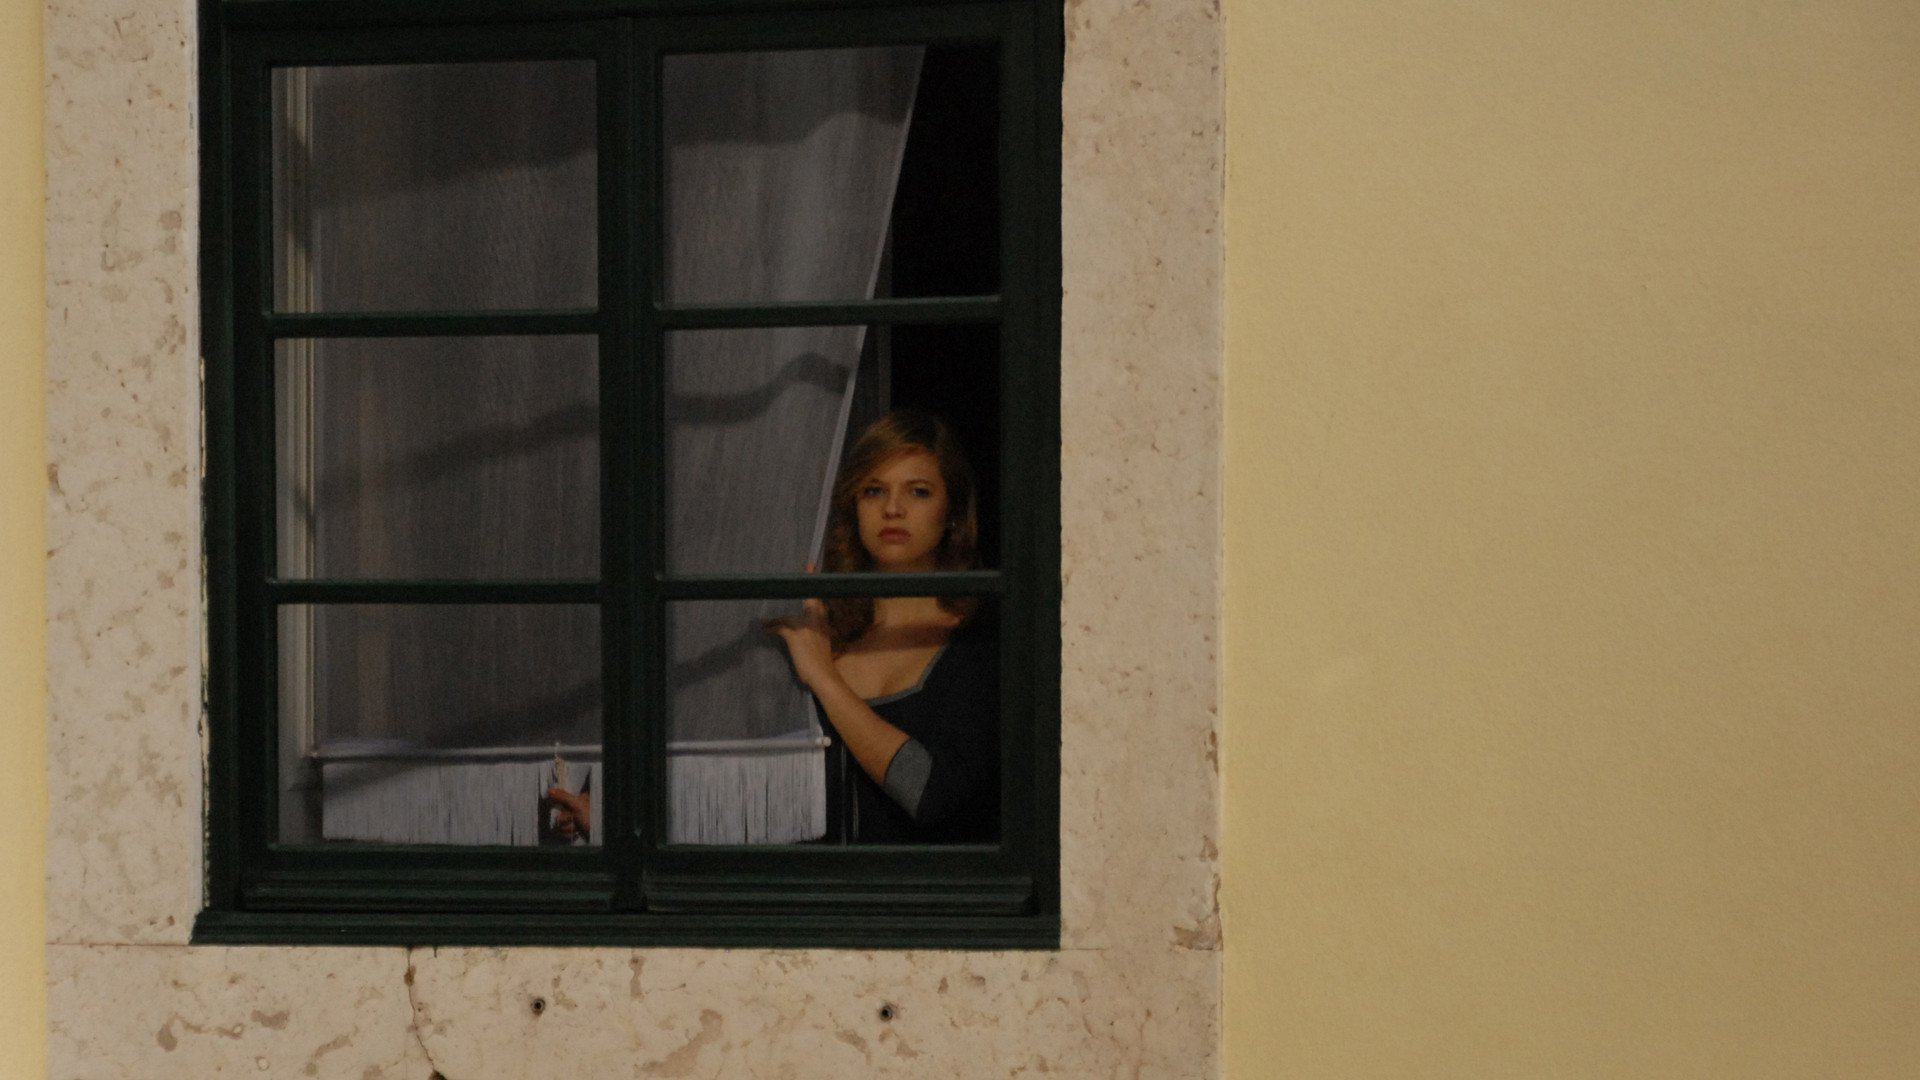 Подглядывание за соседями. Окна напротив. Девошка в окне на против. Девушка в окне напротив. Заглядывая в окна домов.